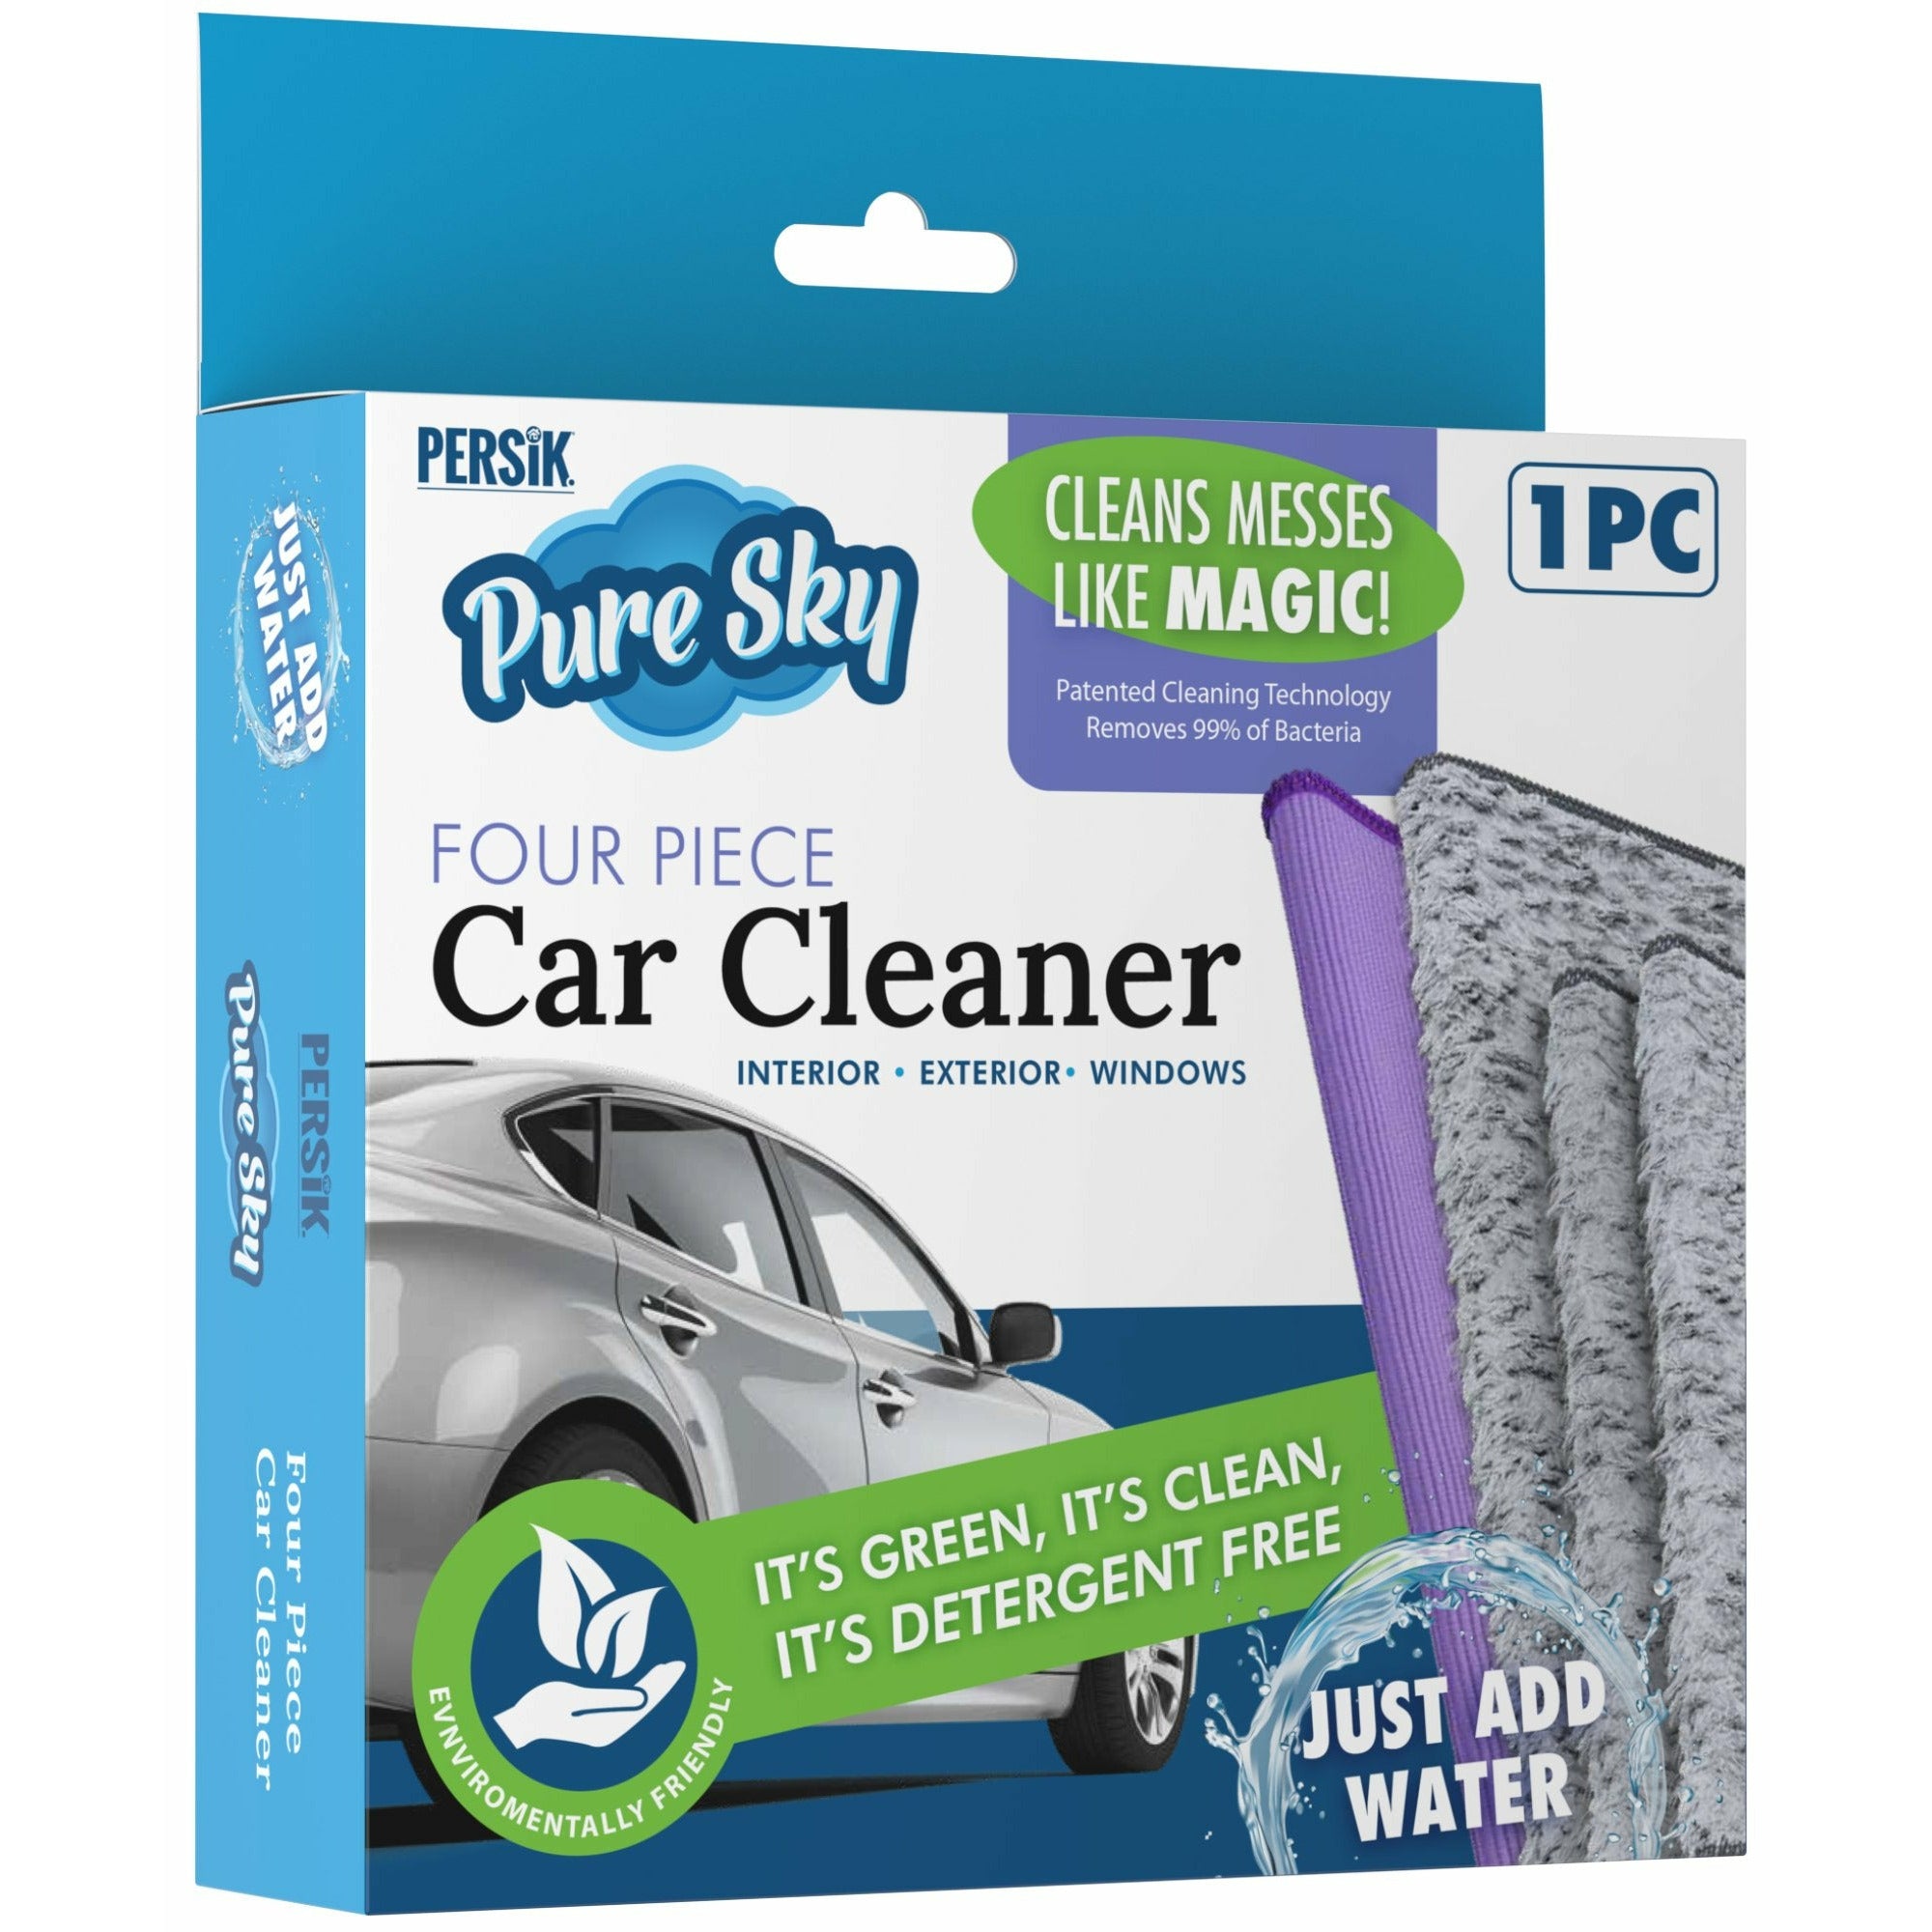 Botao Car Wash Kit 6 Pcs, Car Cleaning Tools With Soft Microfiber Cloth  Towels, Wash